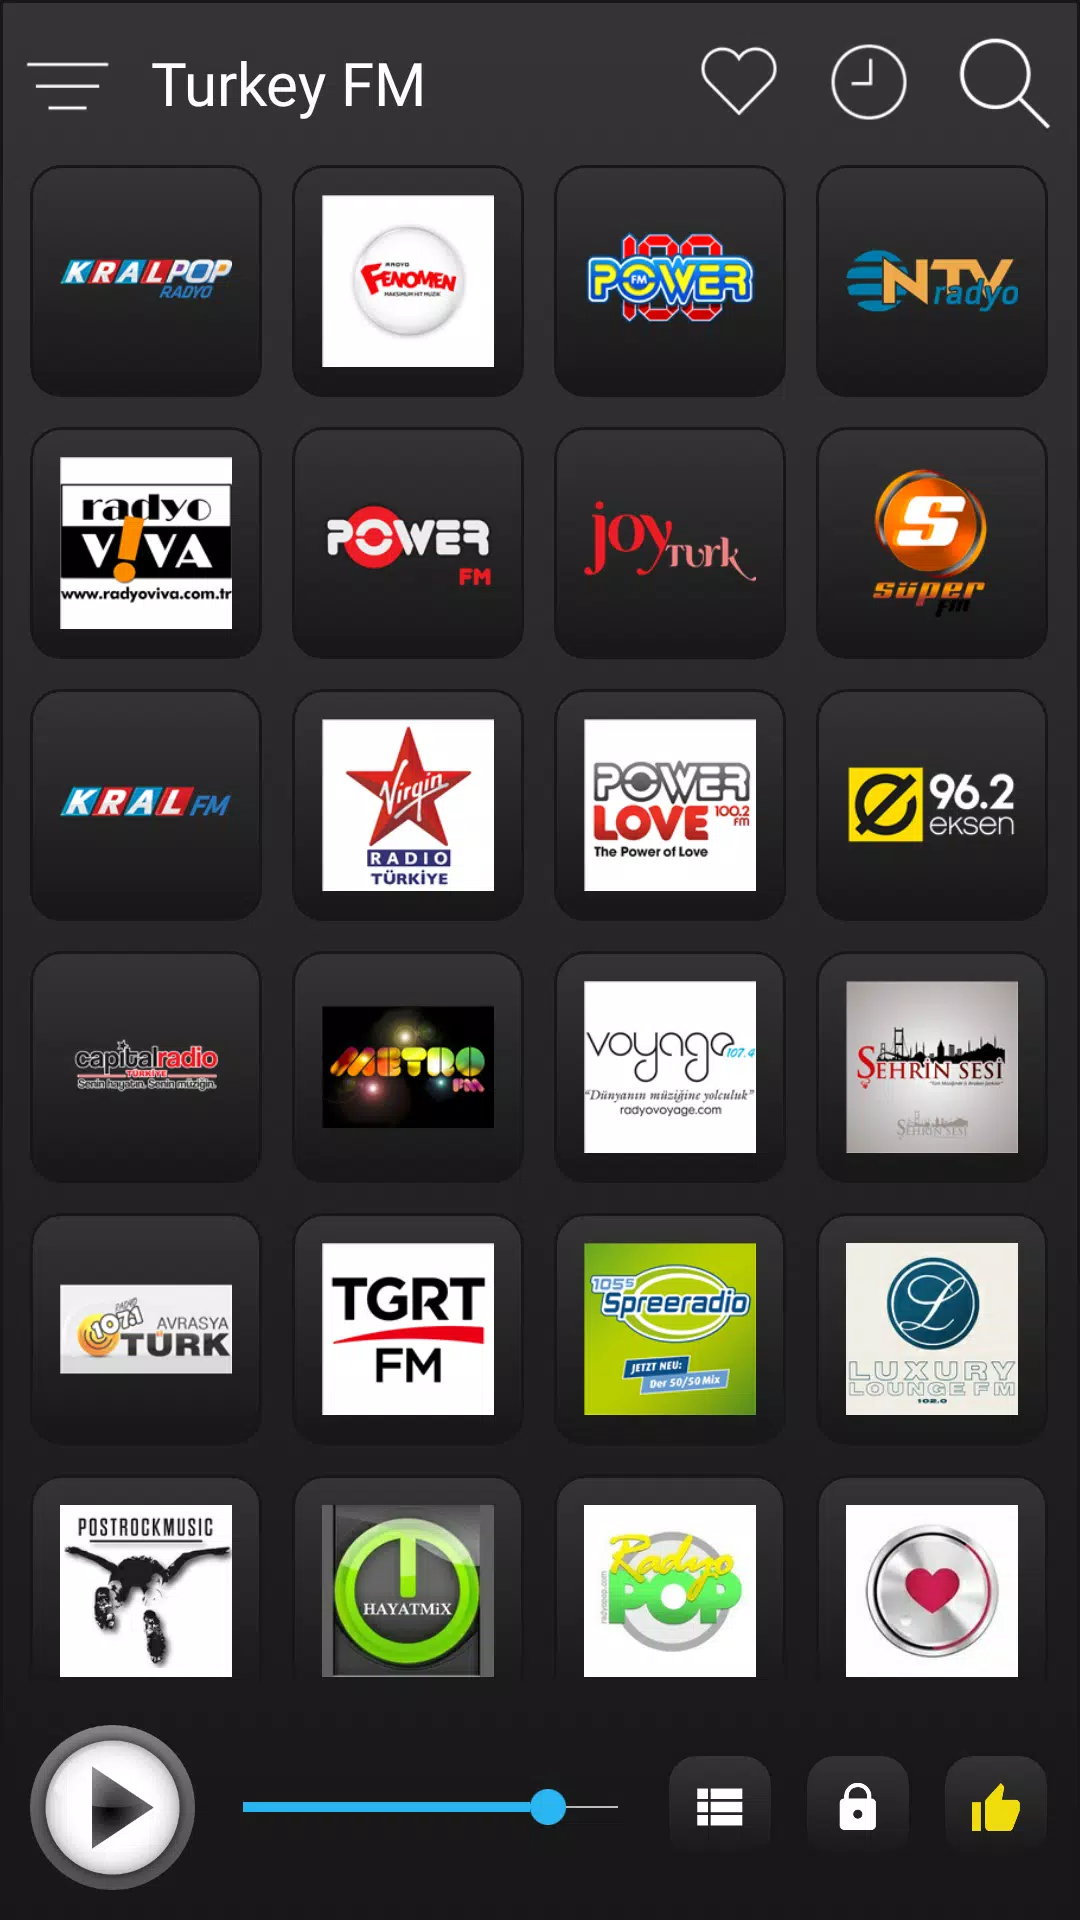 Turkey Radio FM - Radio Turkish FM APK for Android Download